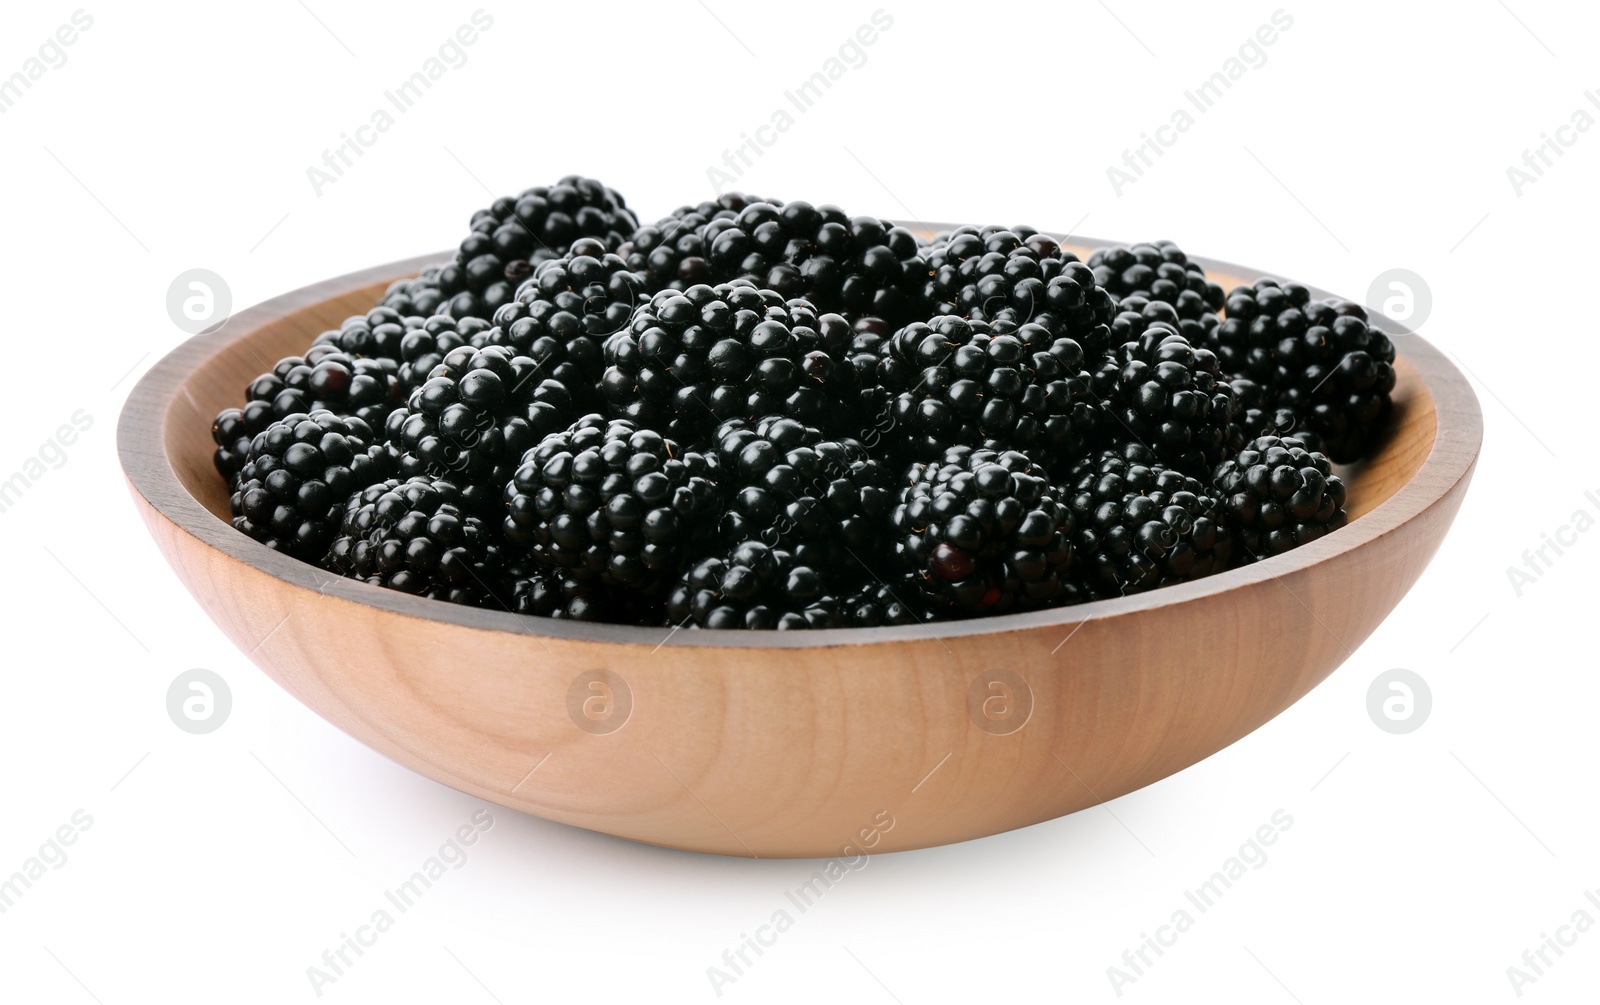 Photo of Wooden bowl of tasty ripe blackberries on white background